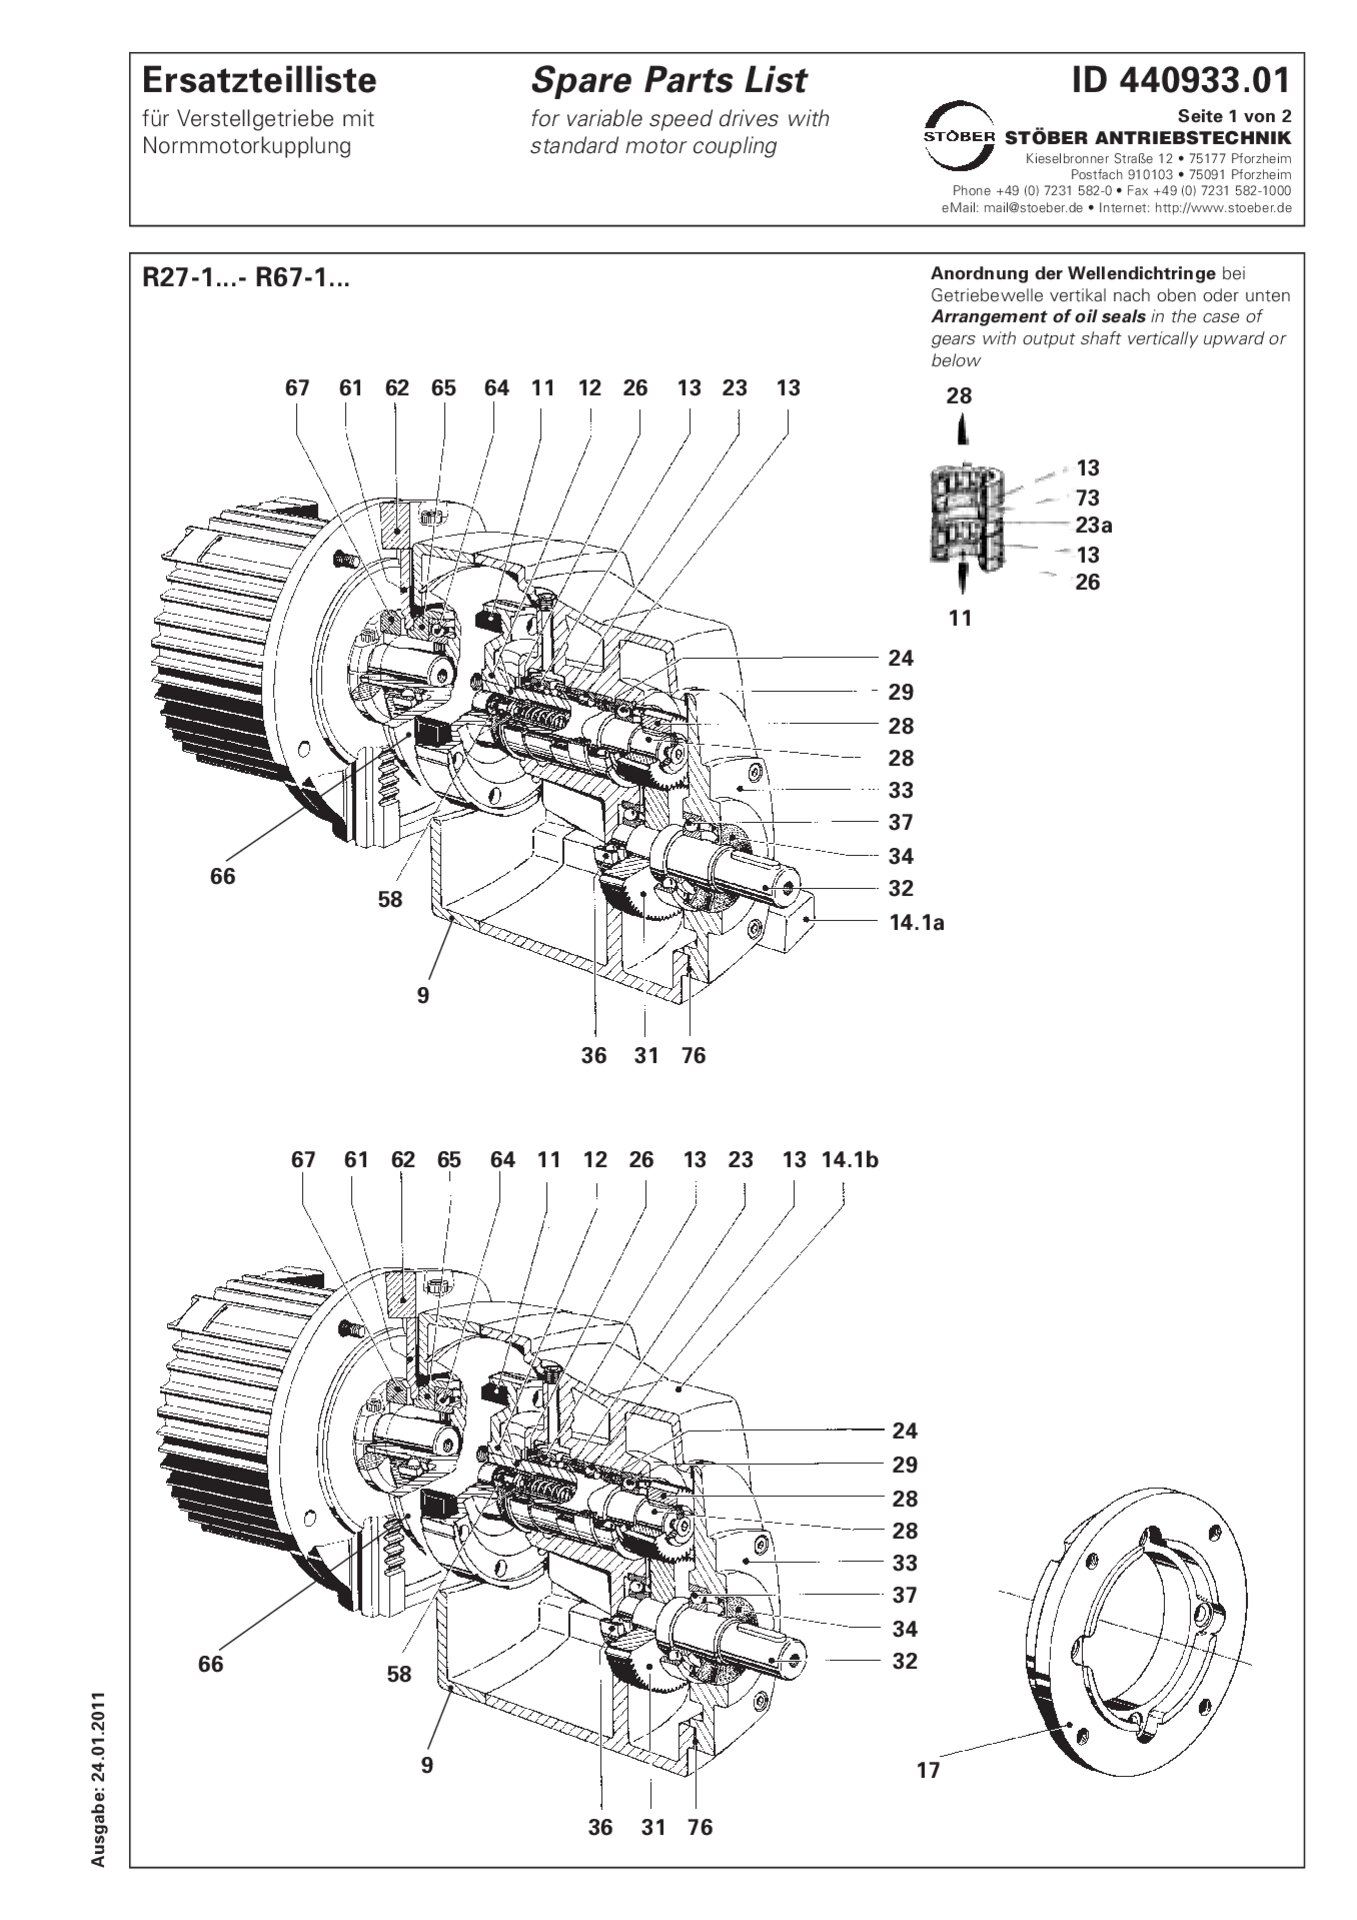 Listino dei pezzi di ricambio R27-1/R37-1/R47-1/R57-1/R67-1 con accoppiamento motore standardErsatzteilliste R27-1/R37-1/R47-1/R57-1/R67-1 mit NormmotorkupplungListe des pièces de rechange R27-1/R37-1/R47-1/R57-1/R67-1 avec accouplement de moteur standardSpare parts list R27-1/R37-1/R47-1/R57-1/R67-1 with standard motor coupling